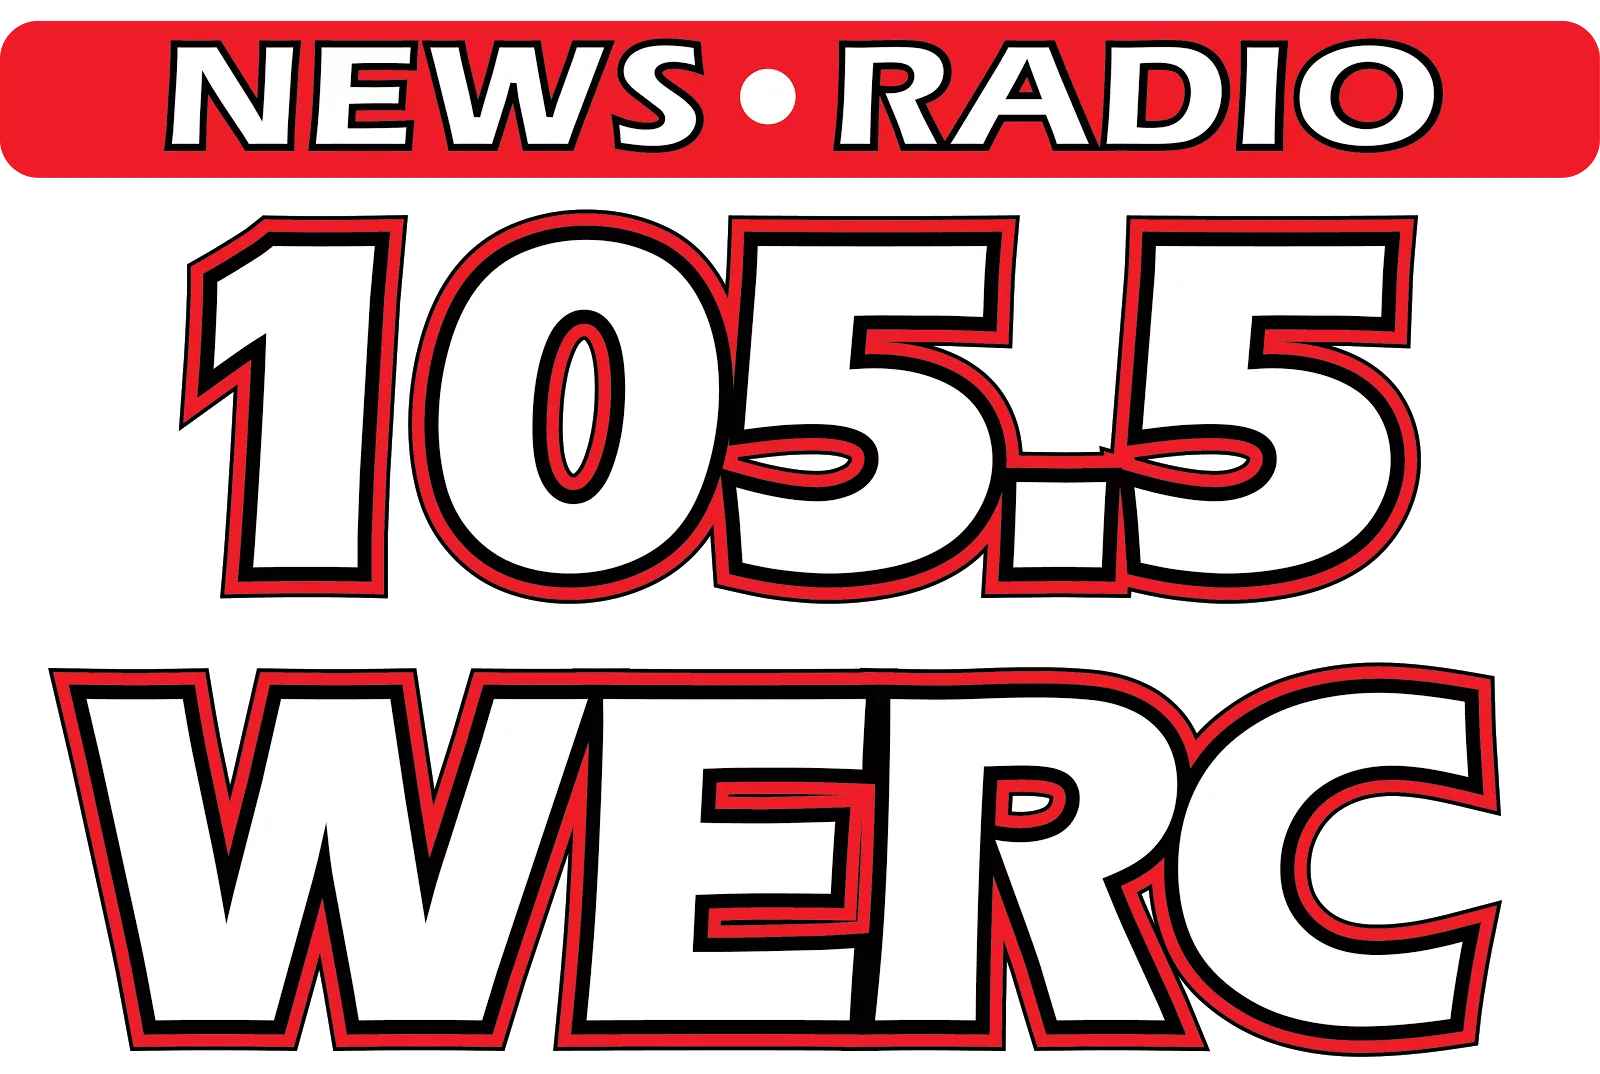 News Radio 105.5 WERC